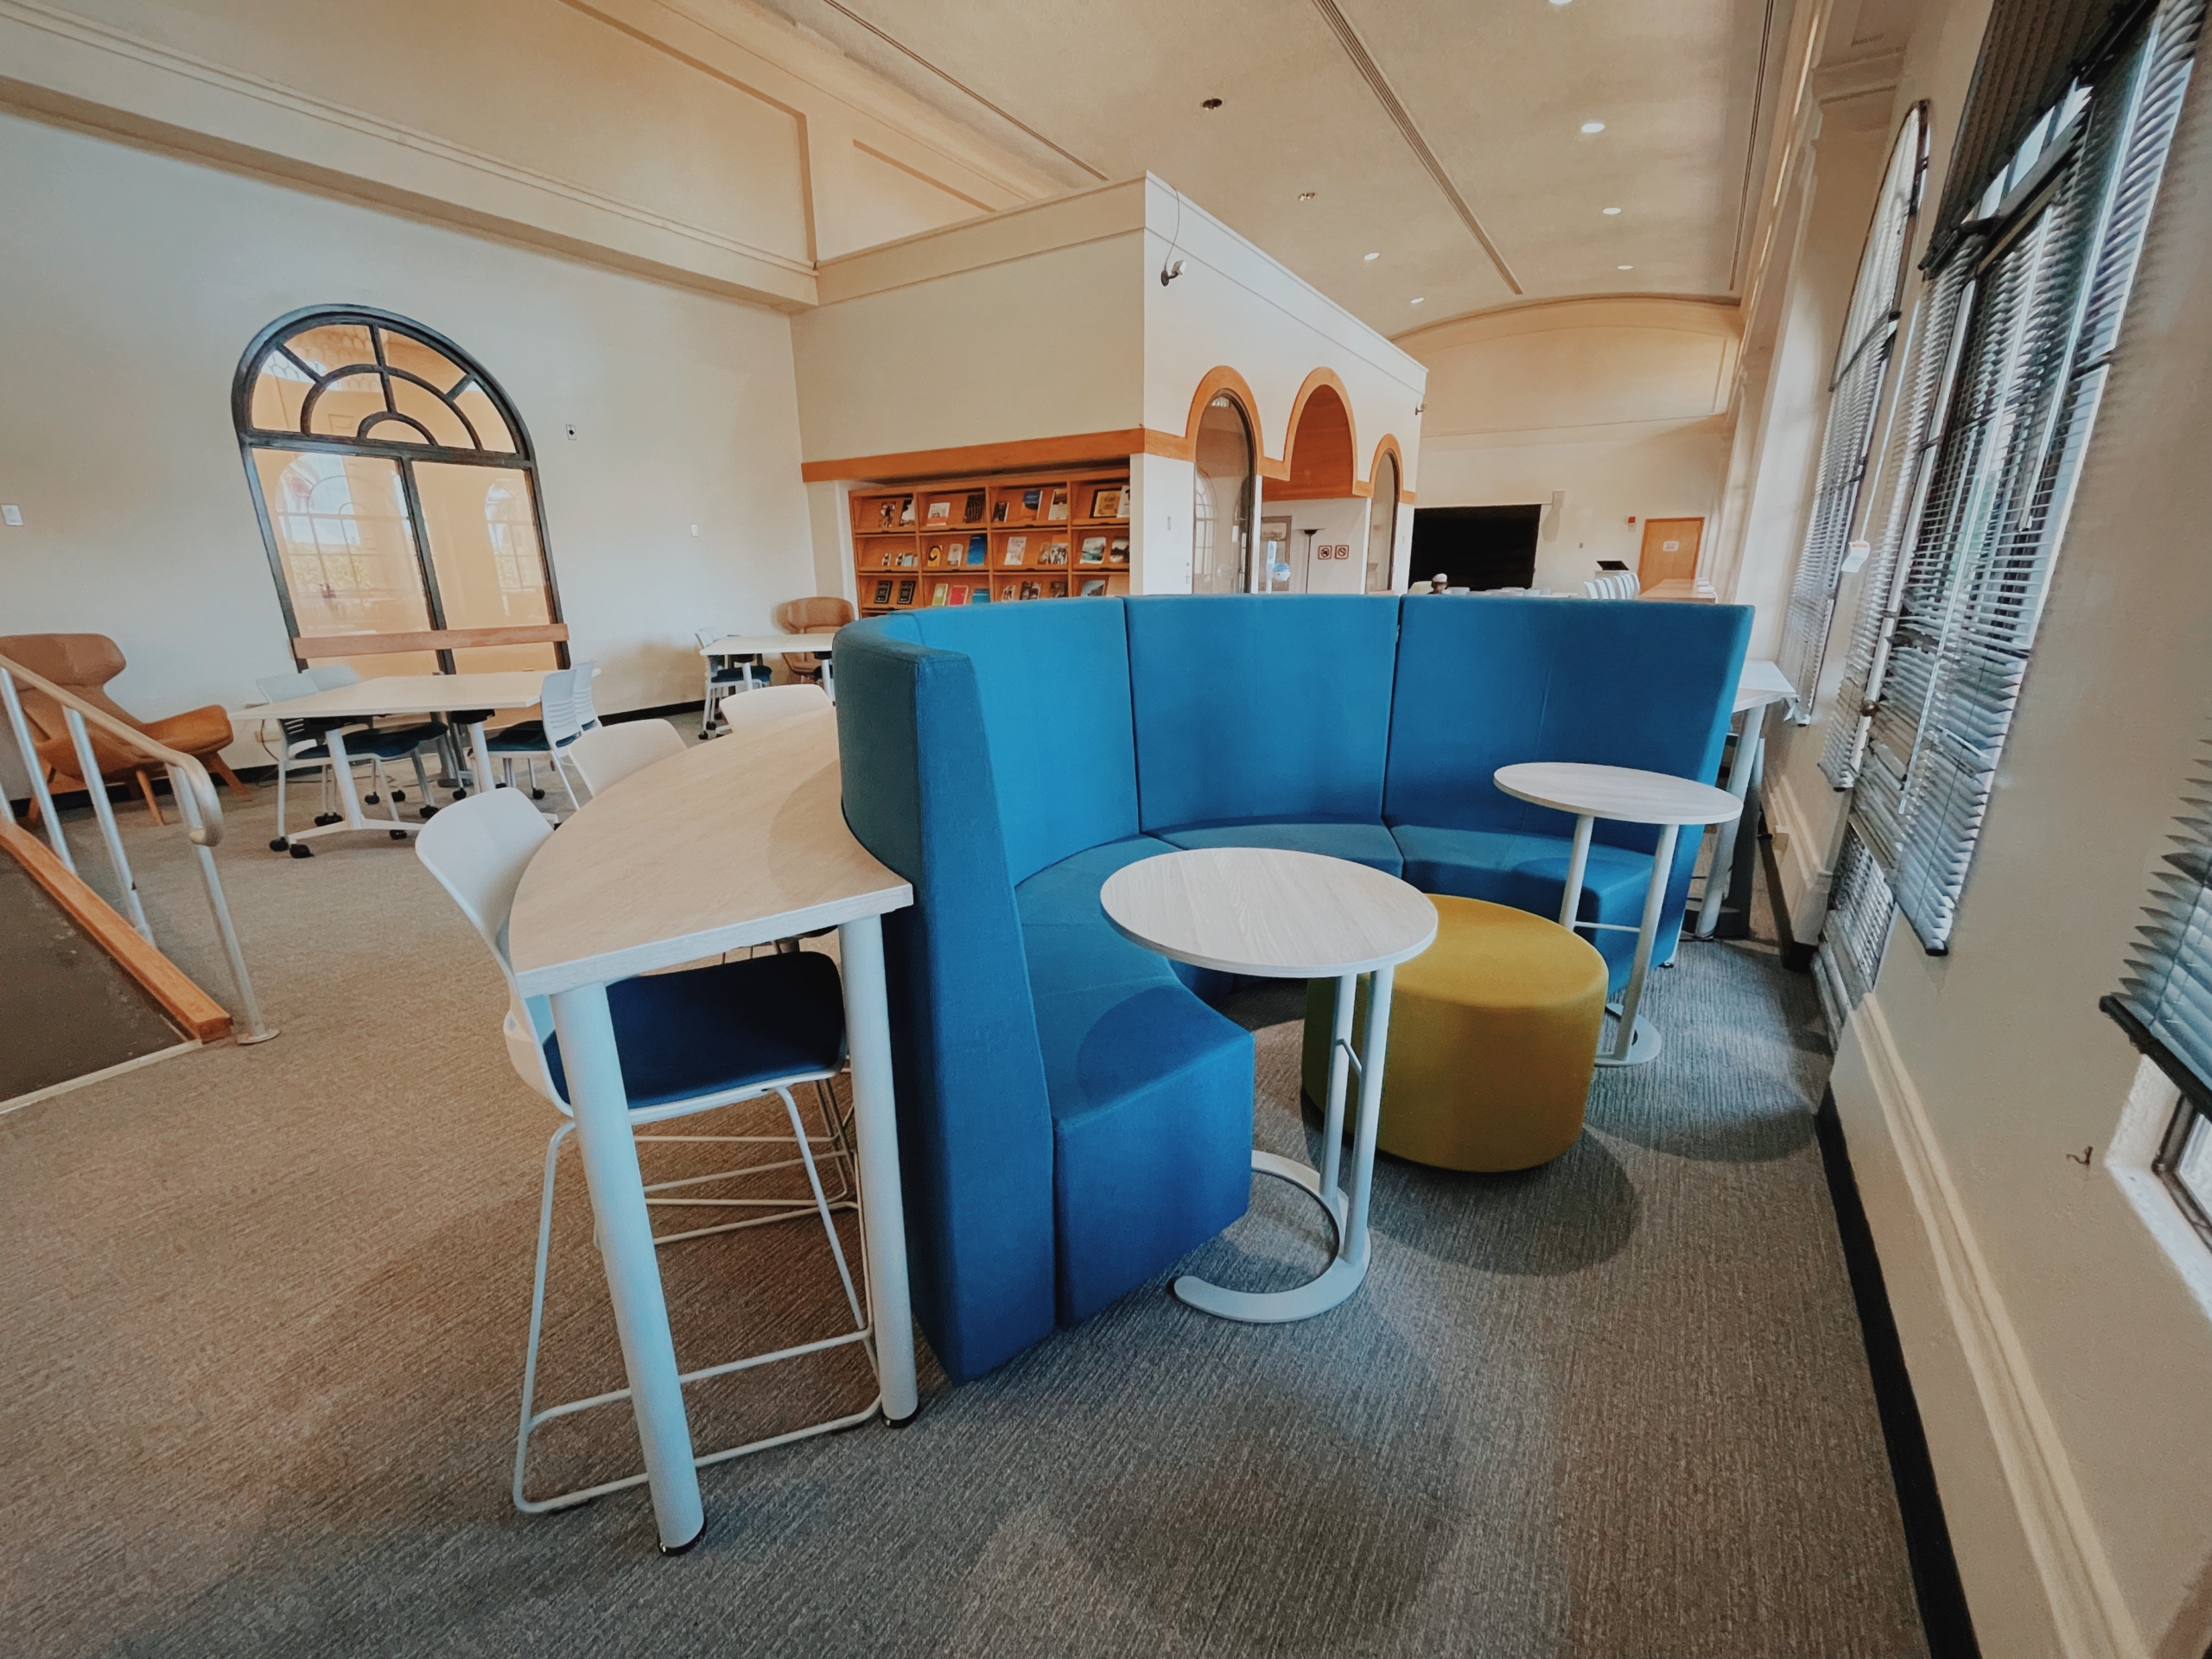 School Collaborative Furniture & Space